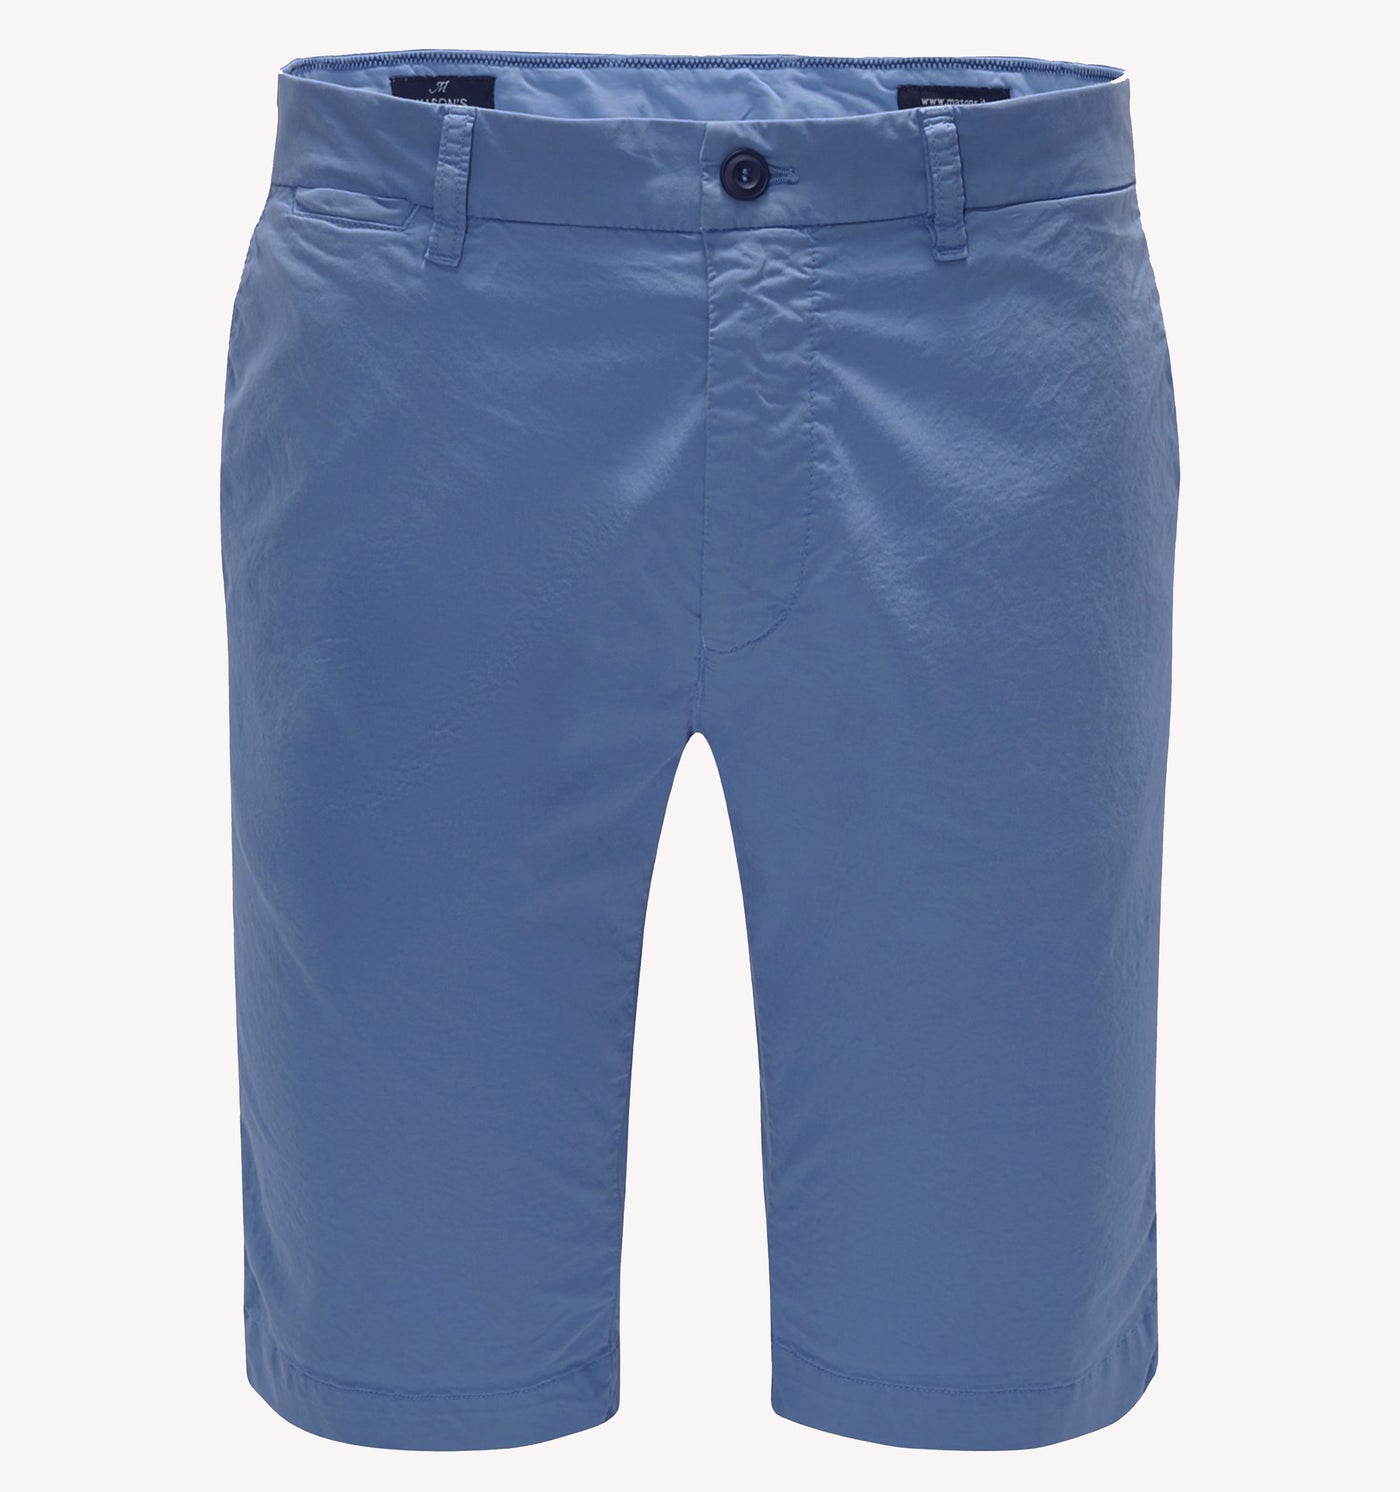 Mason's London Chino Bermuda Shorts in Blue